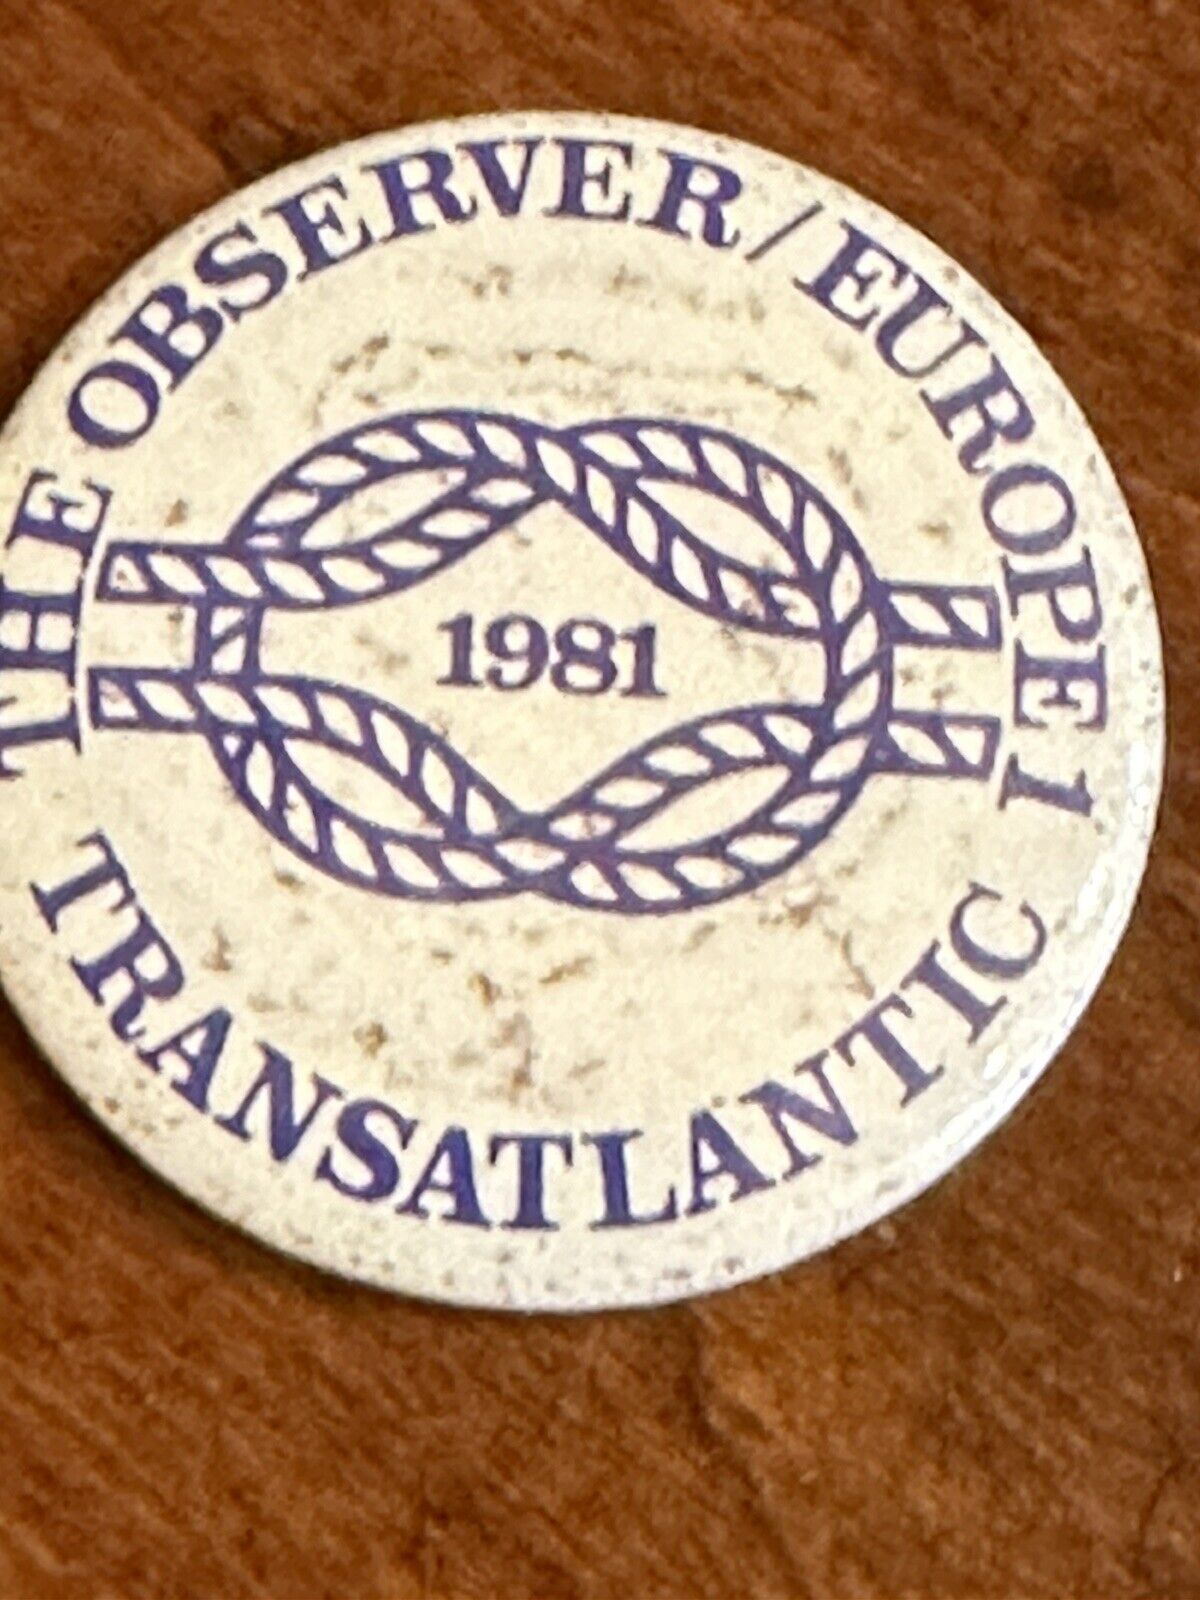 Vintage The Observer Europe1 Transatlantic Pin Button 1981